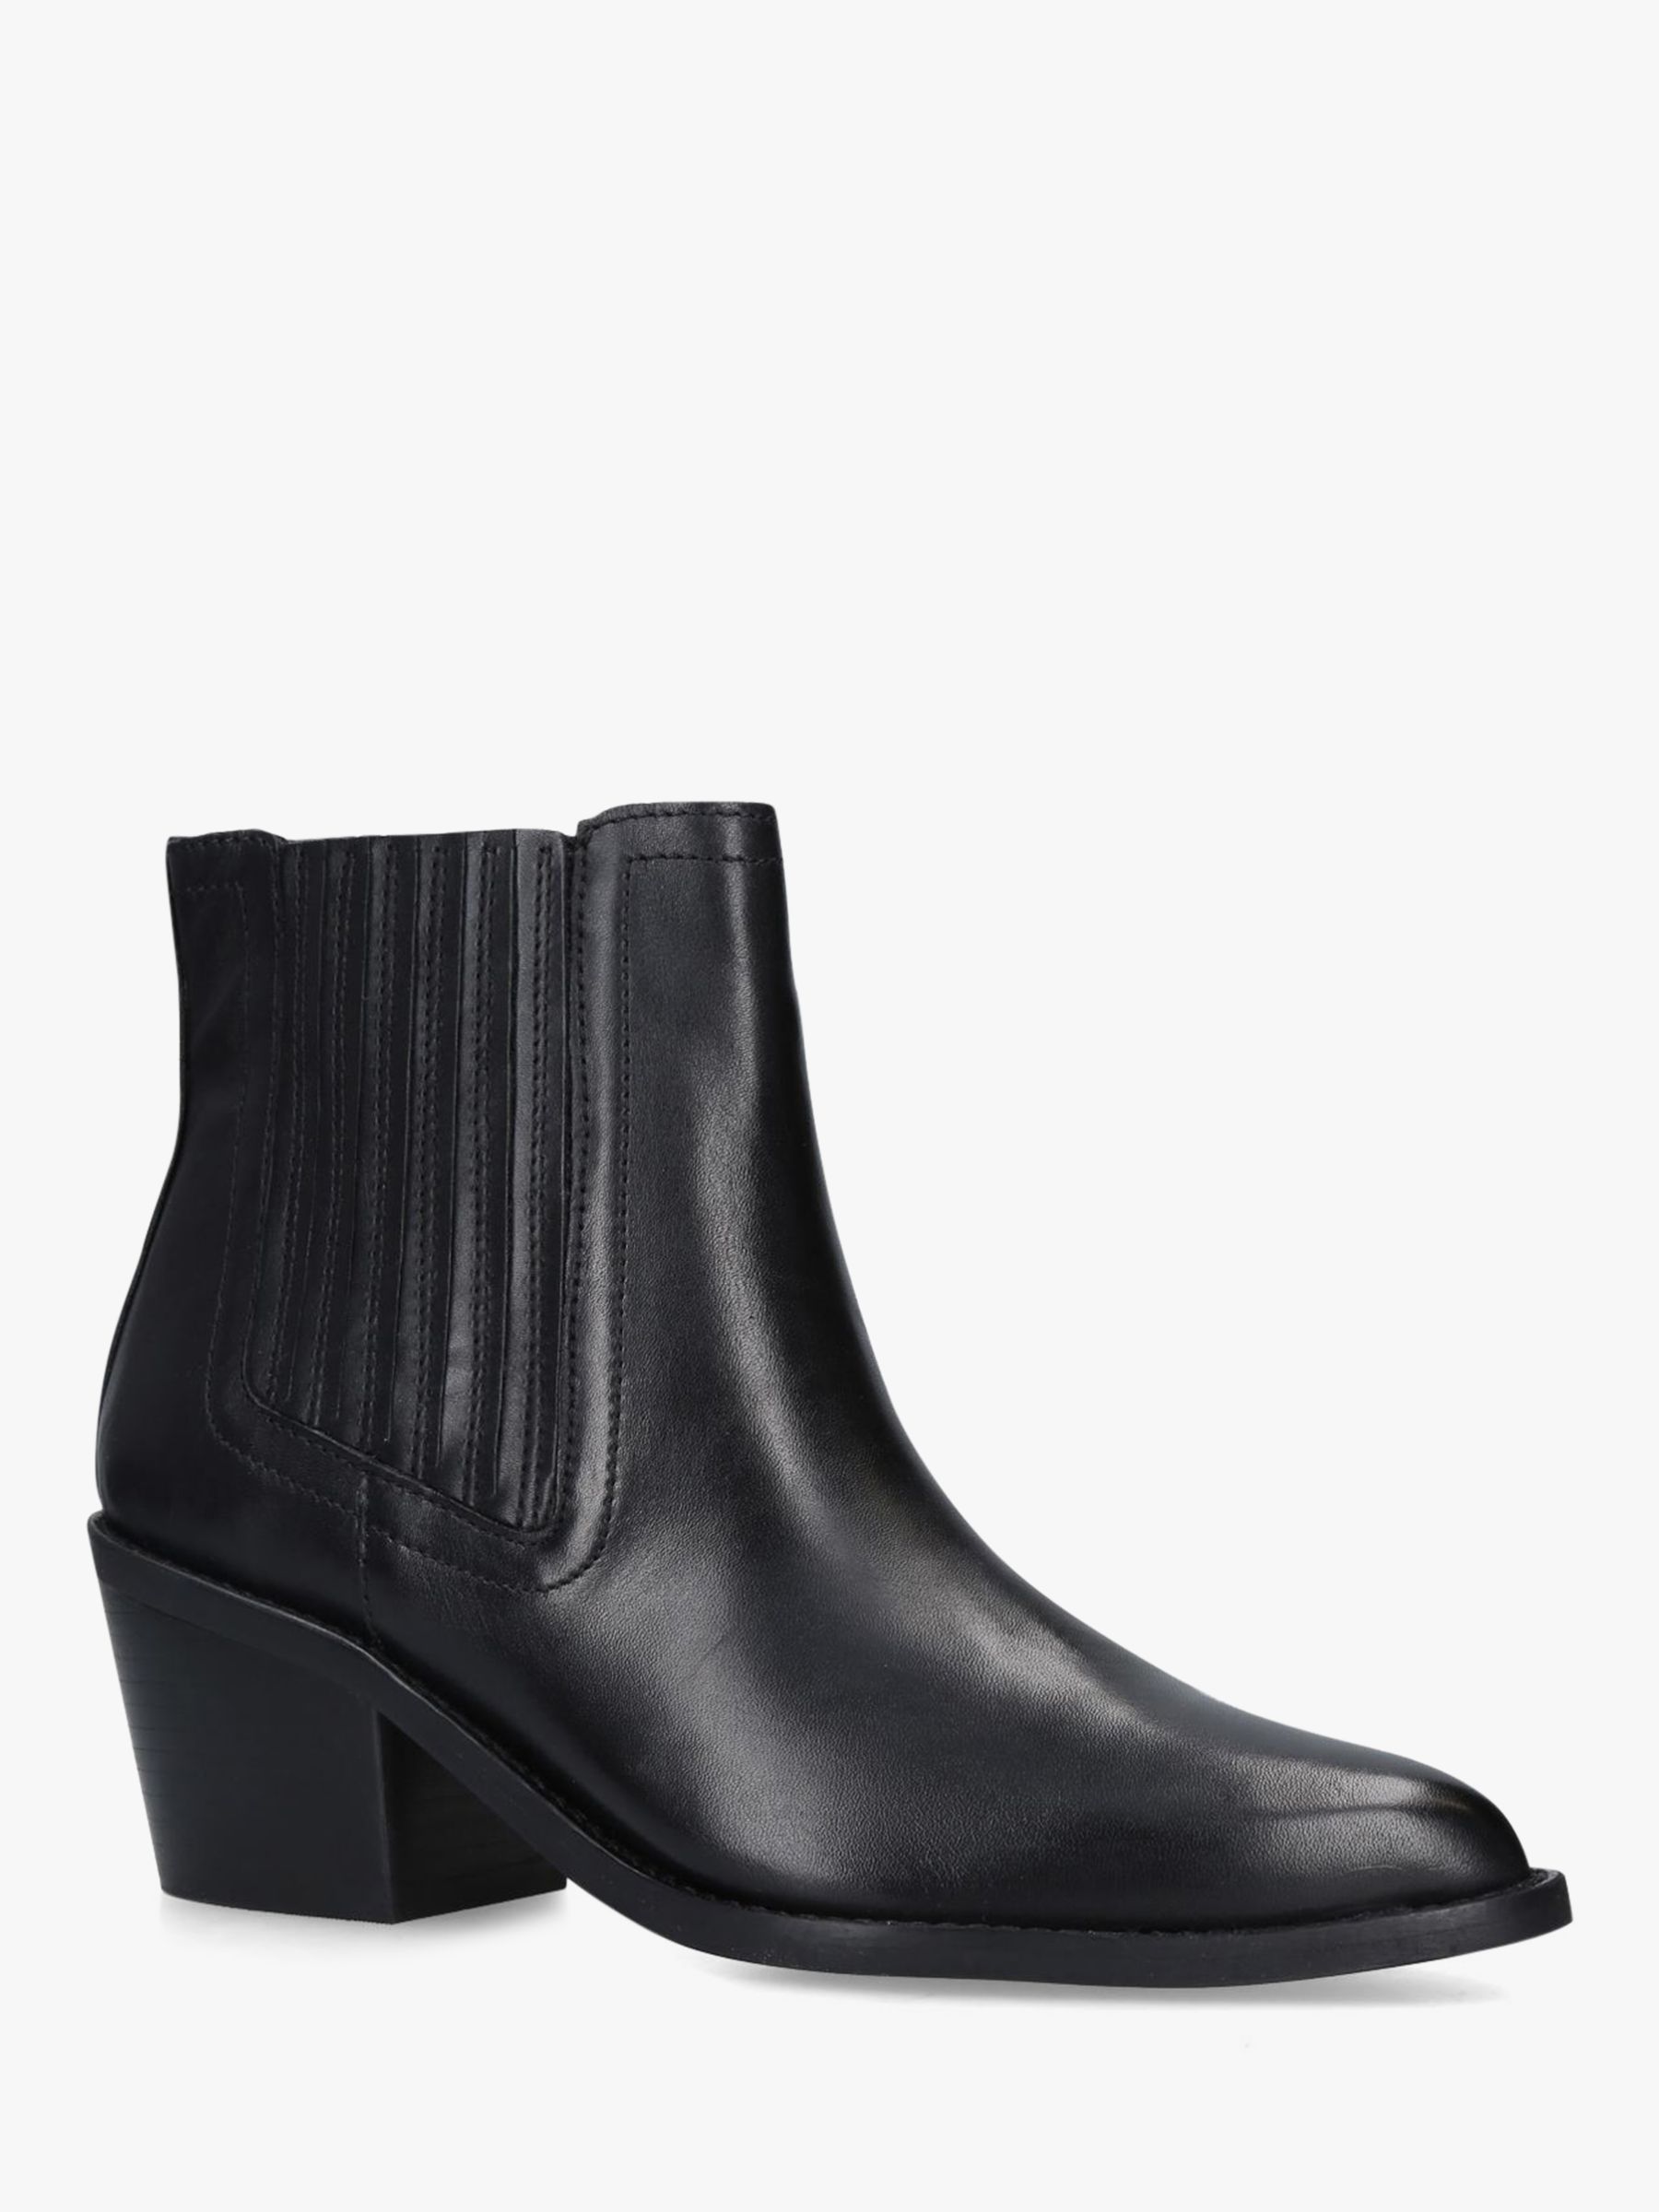 Kurt Geiger London Sylvie Leather Block Heel Ankle Boots, Black